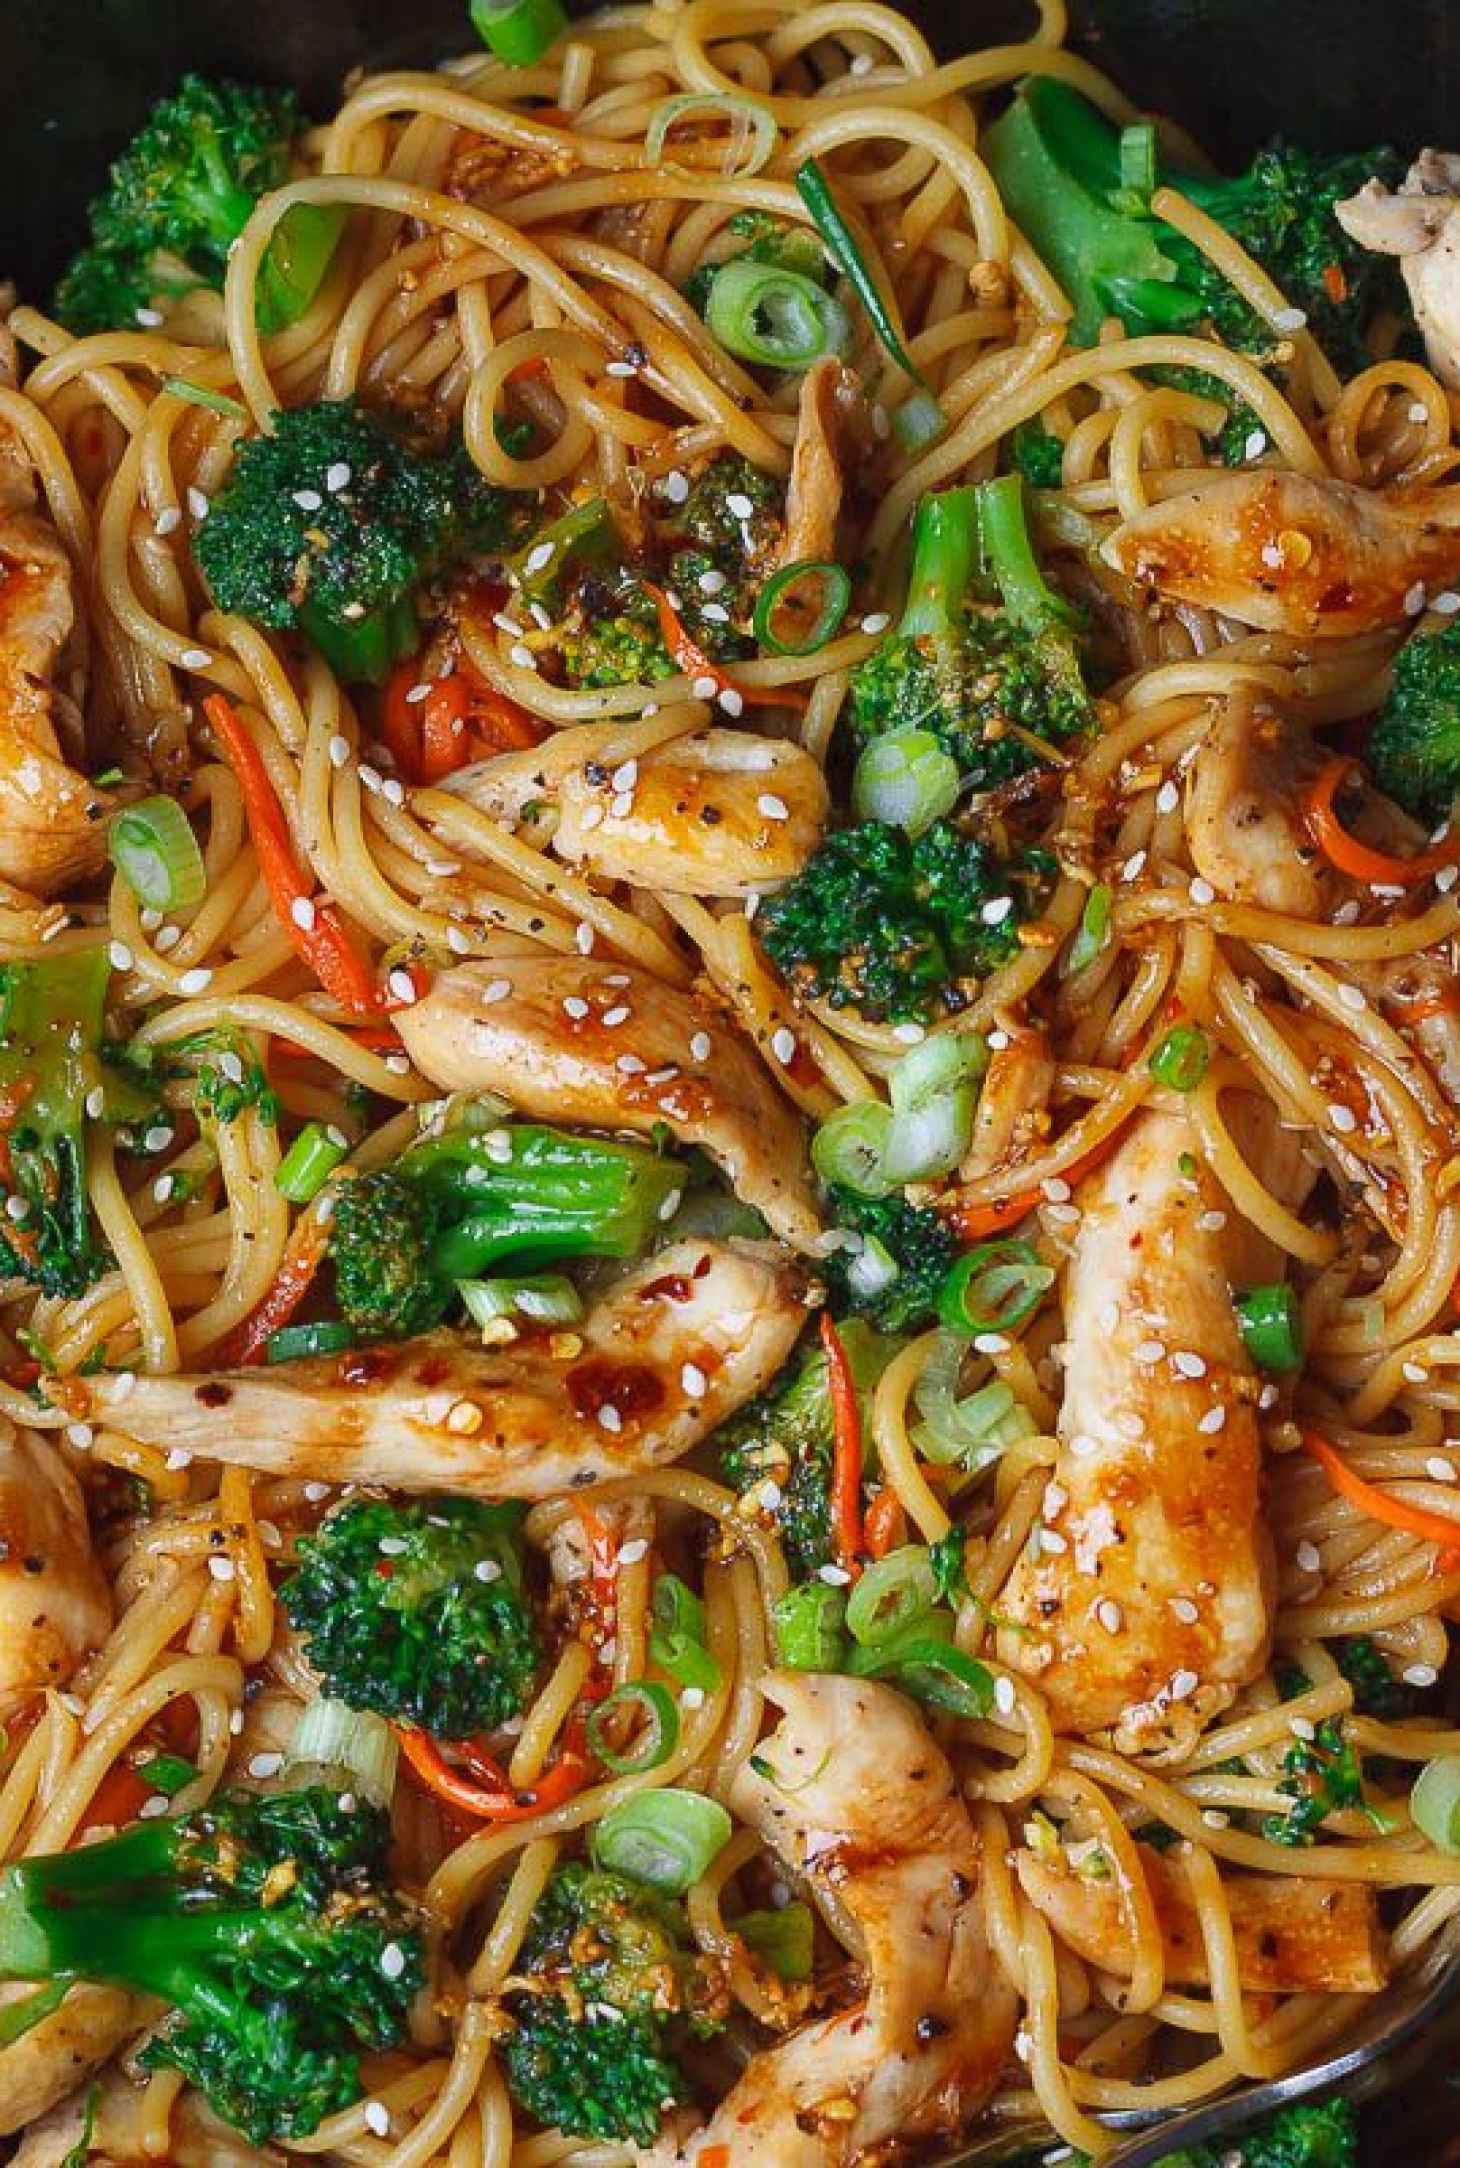 15-Minute Chicken Stir Fry Noodles - #recipe by #eatwell101 - https://www.eatwell101.com/chicken-pasta-skillet-recipe